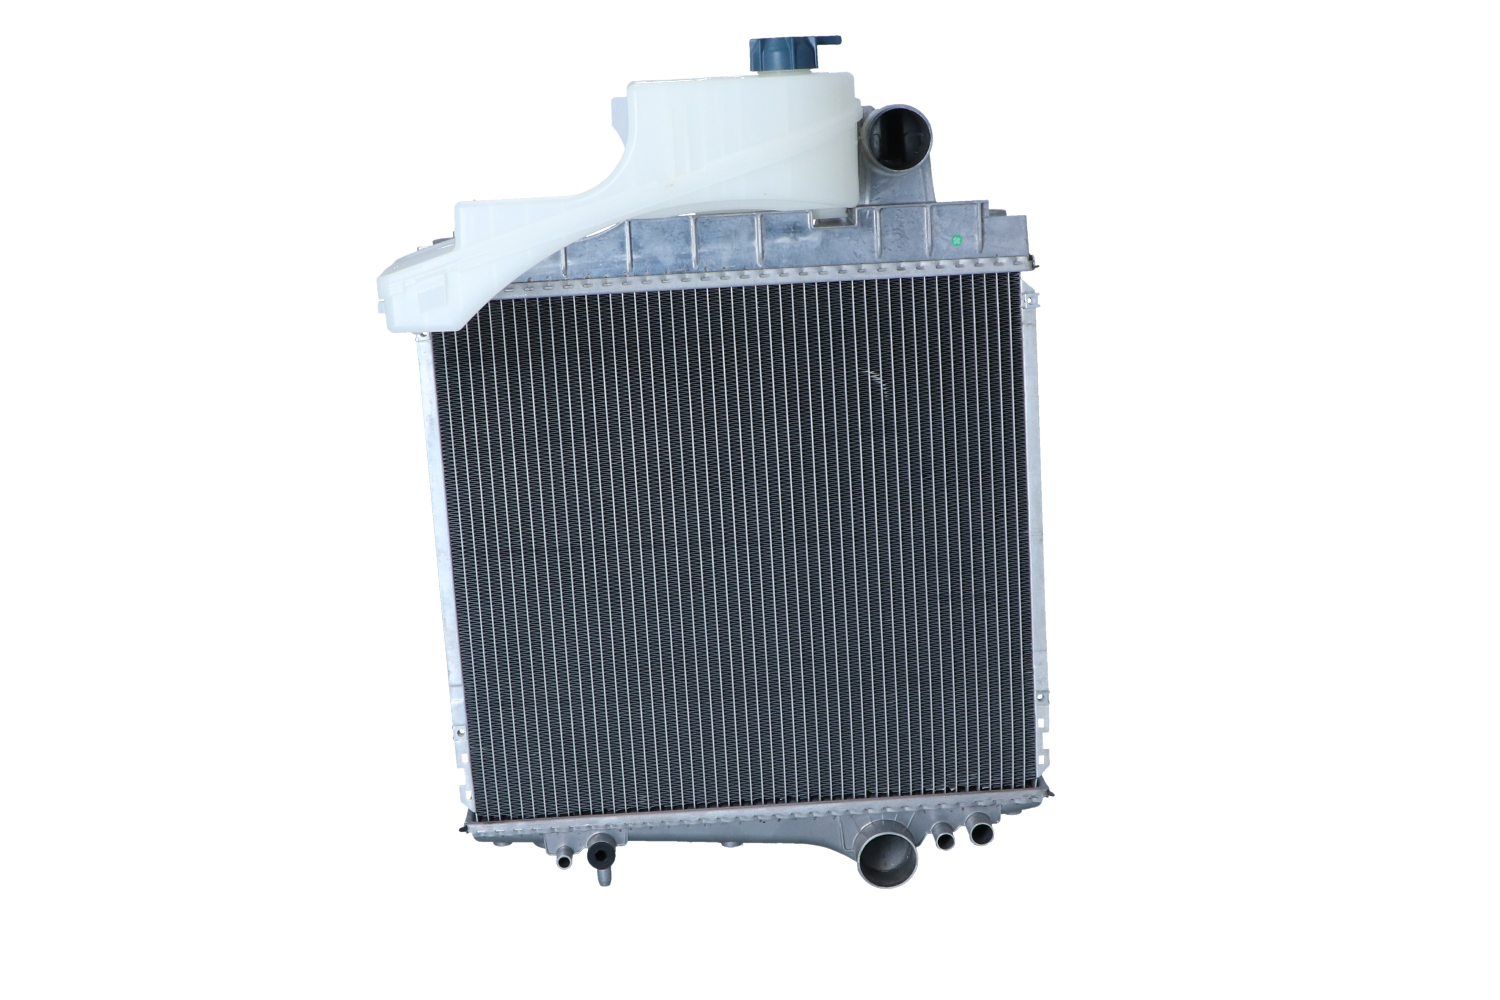 NRF 54109 Engine radiator Aluminium, 547 x 503 x 132 mm, Brazed cooling fins